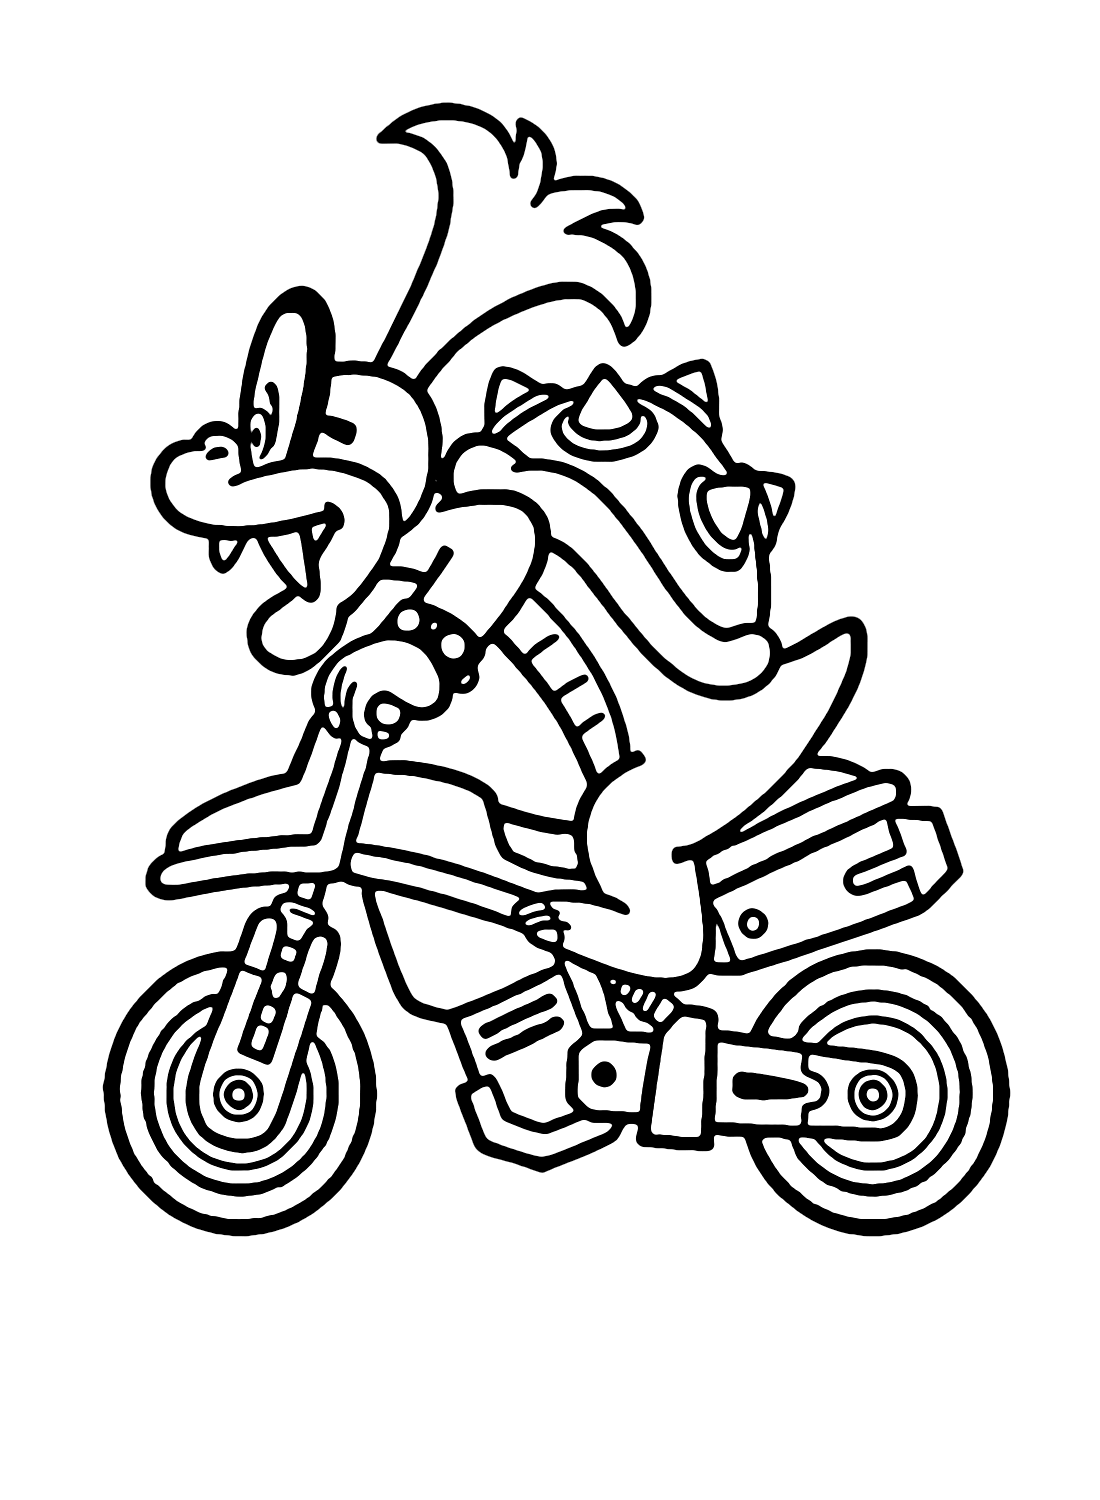 Iggy Mario Kart Coloring Page